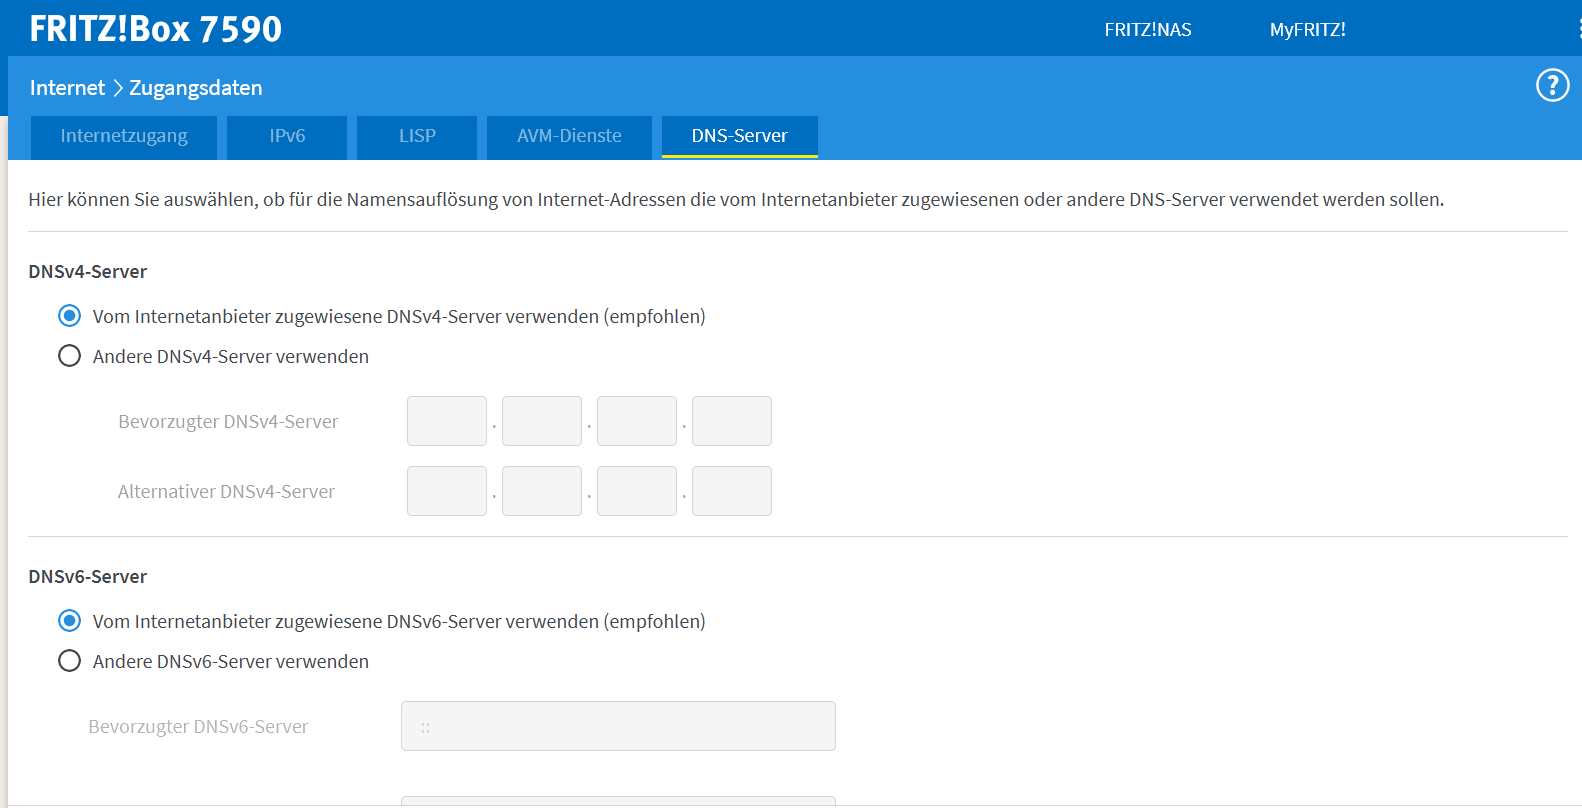 DNS server settings of a Fritz!Box